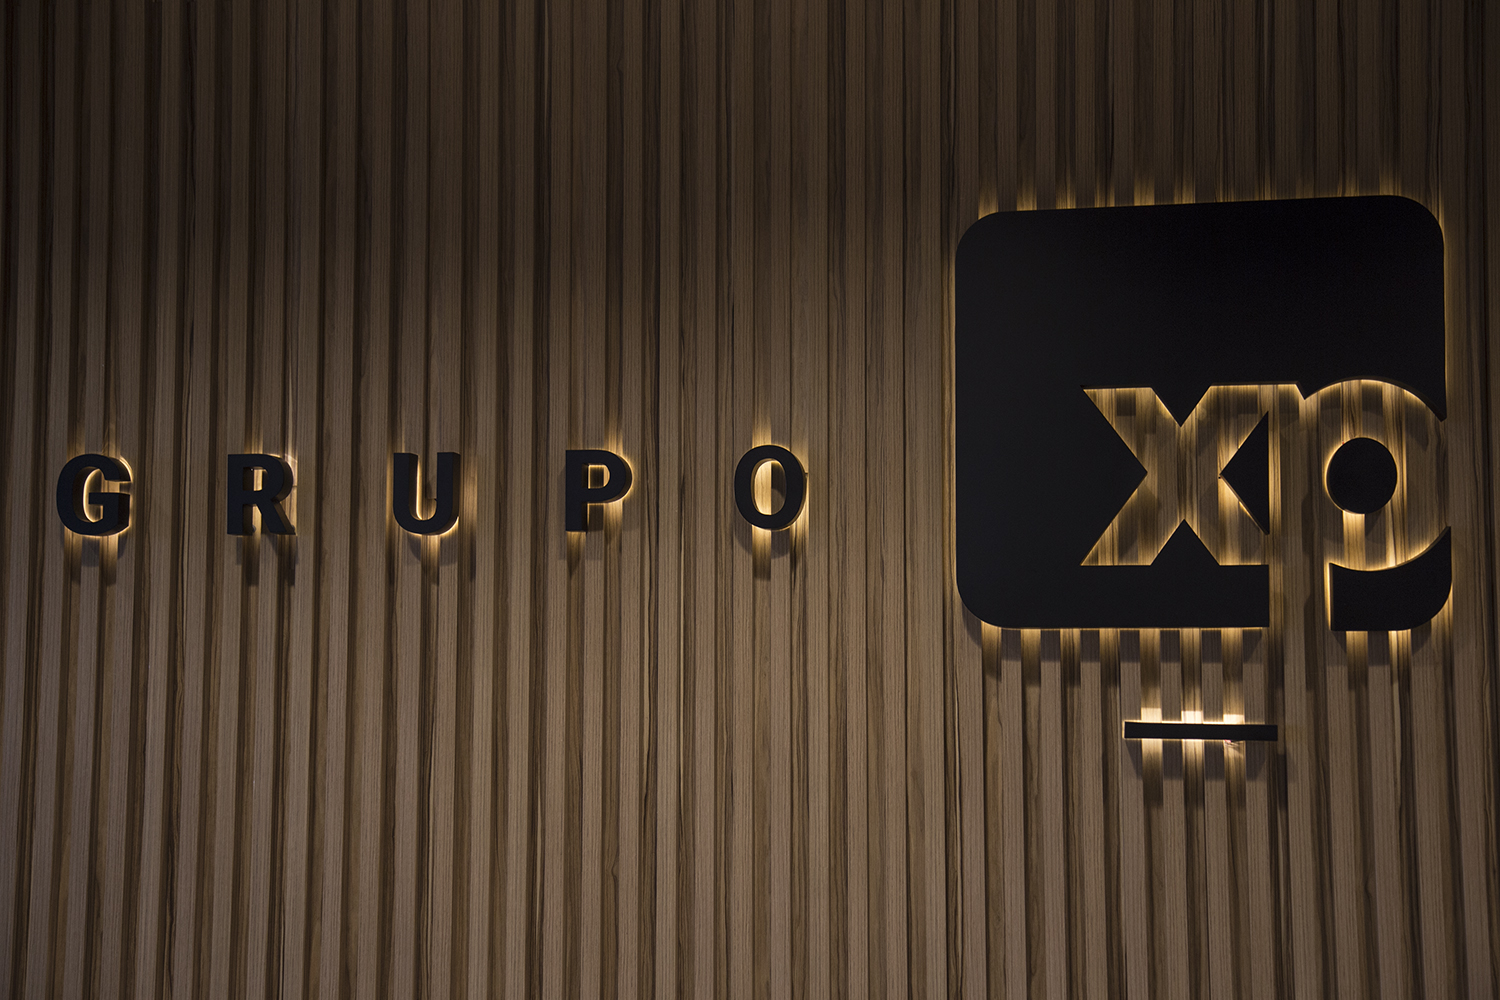 XP Investimentos office in São Paulo